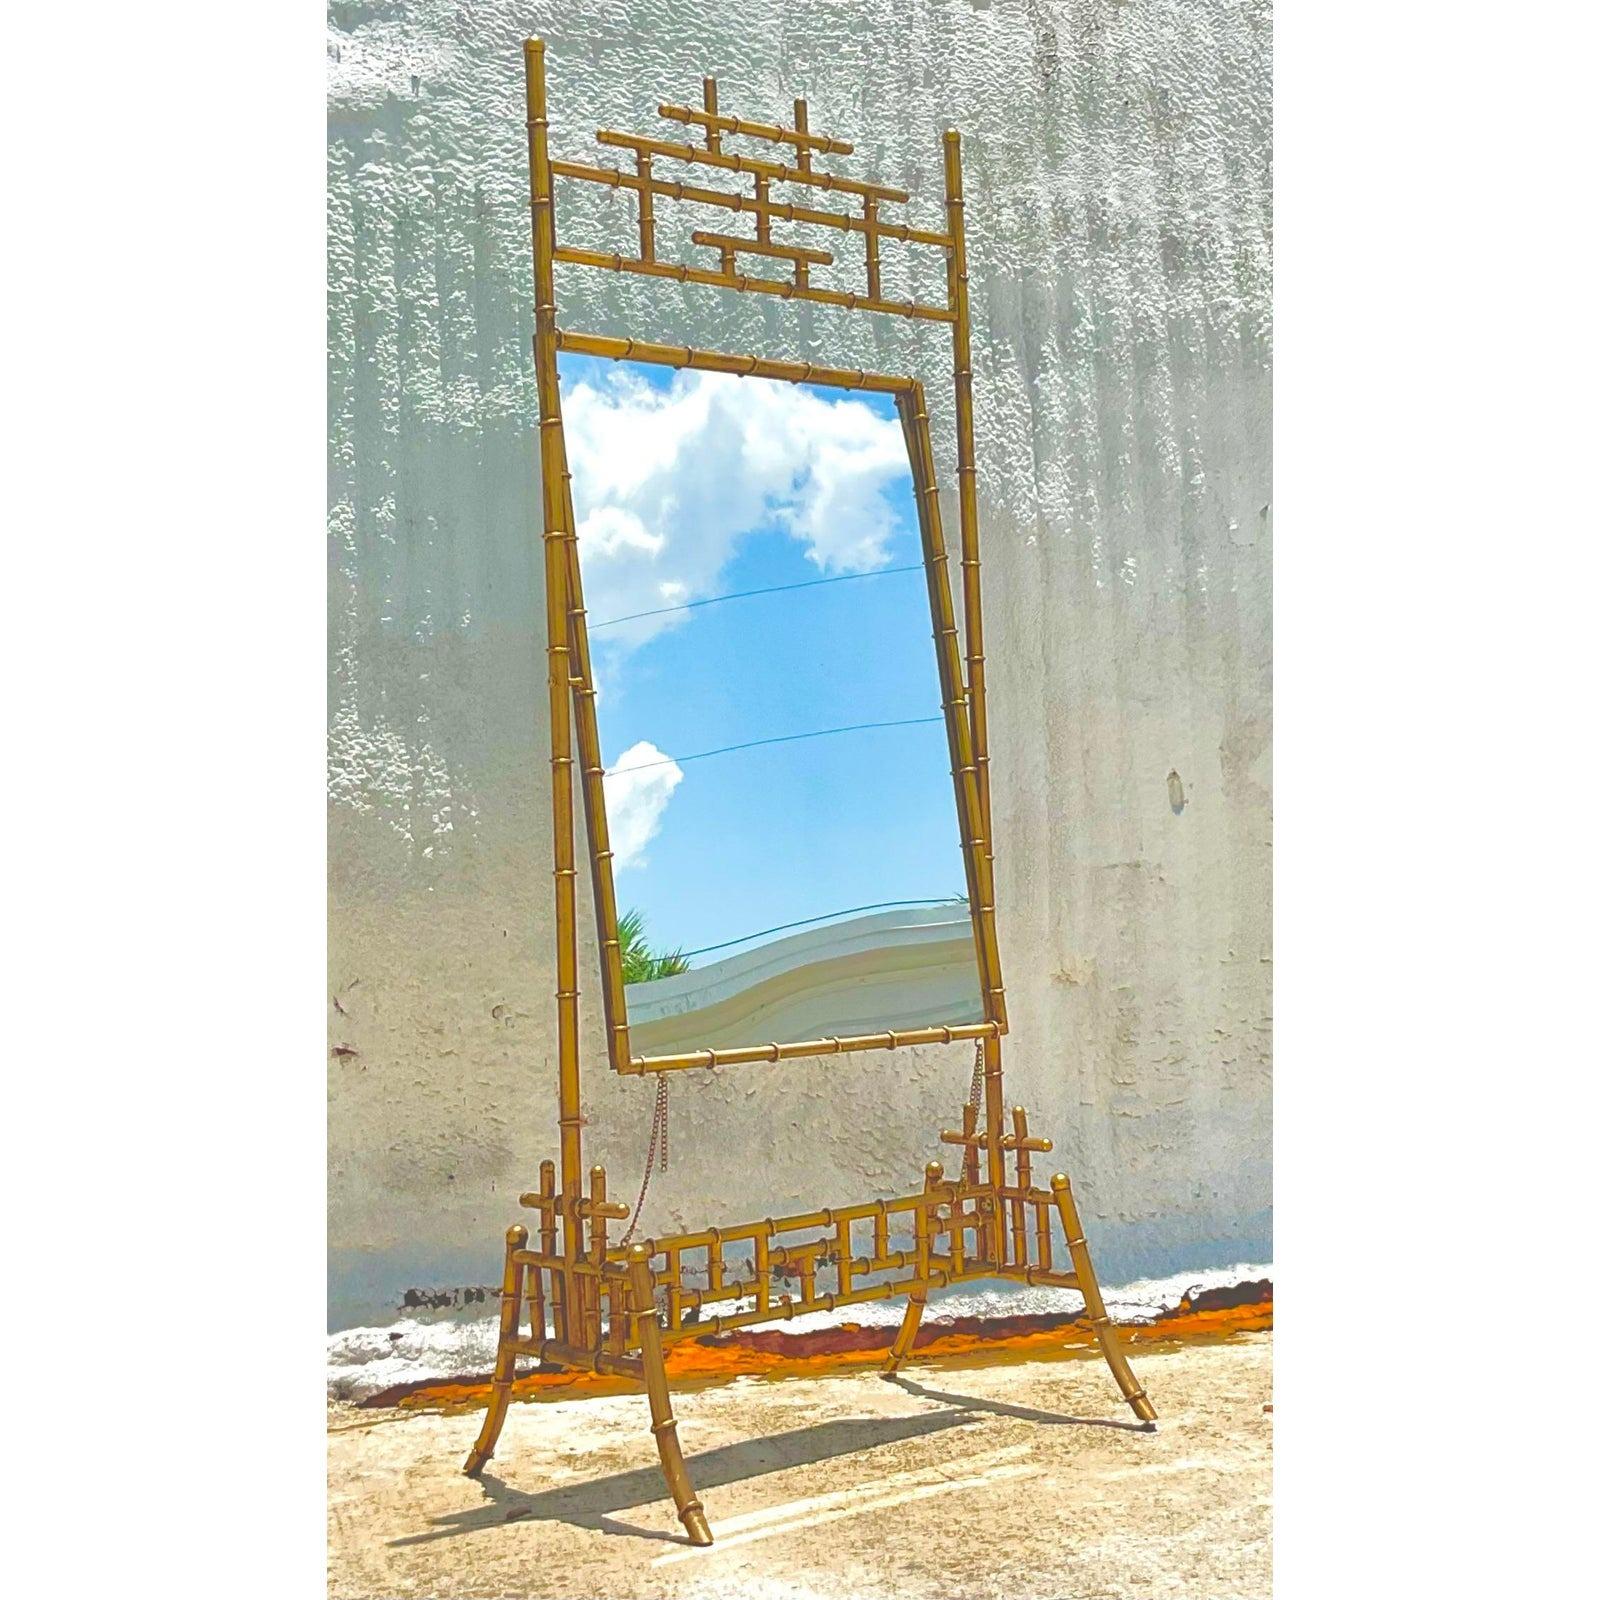 bamboo mirror full length